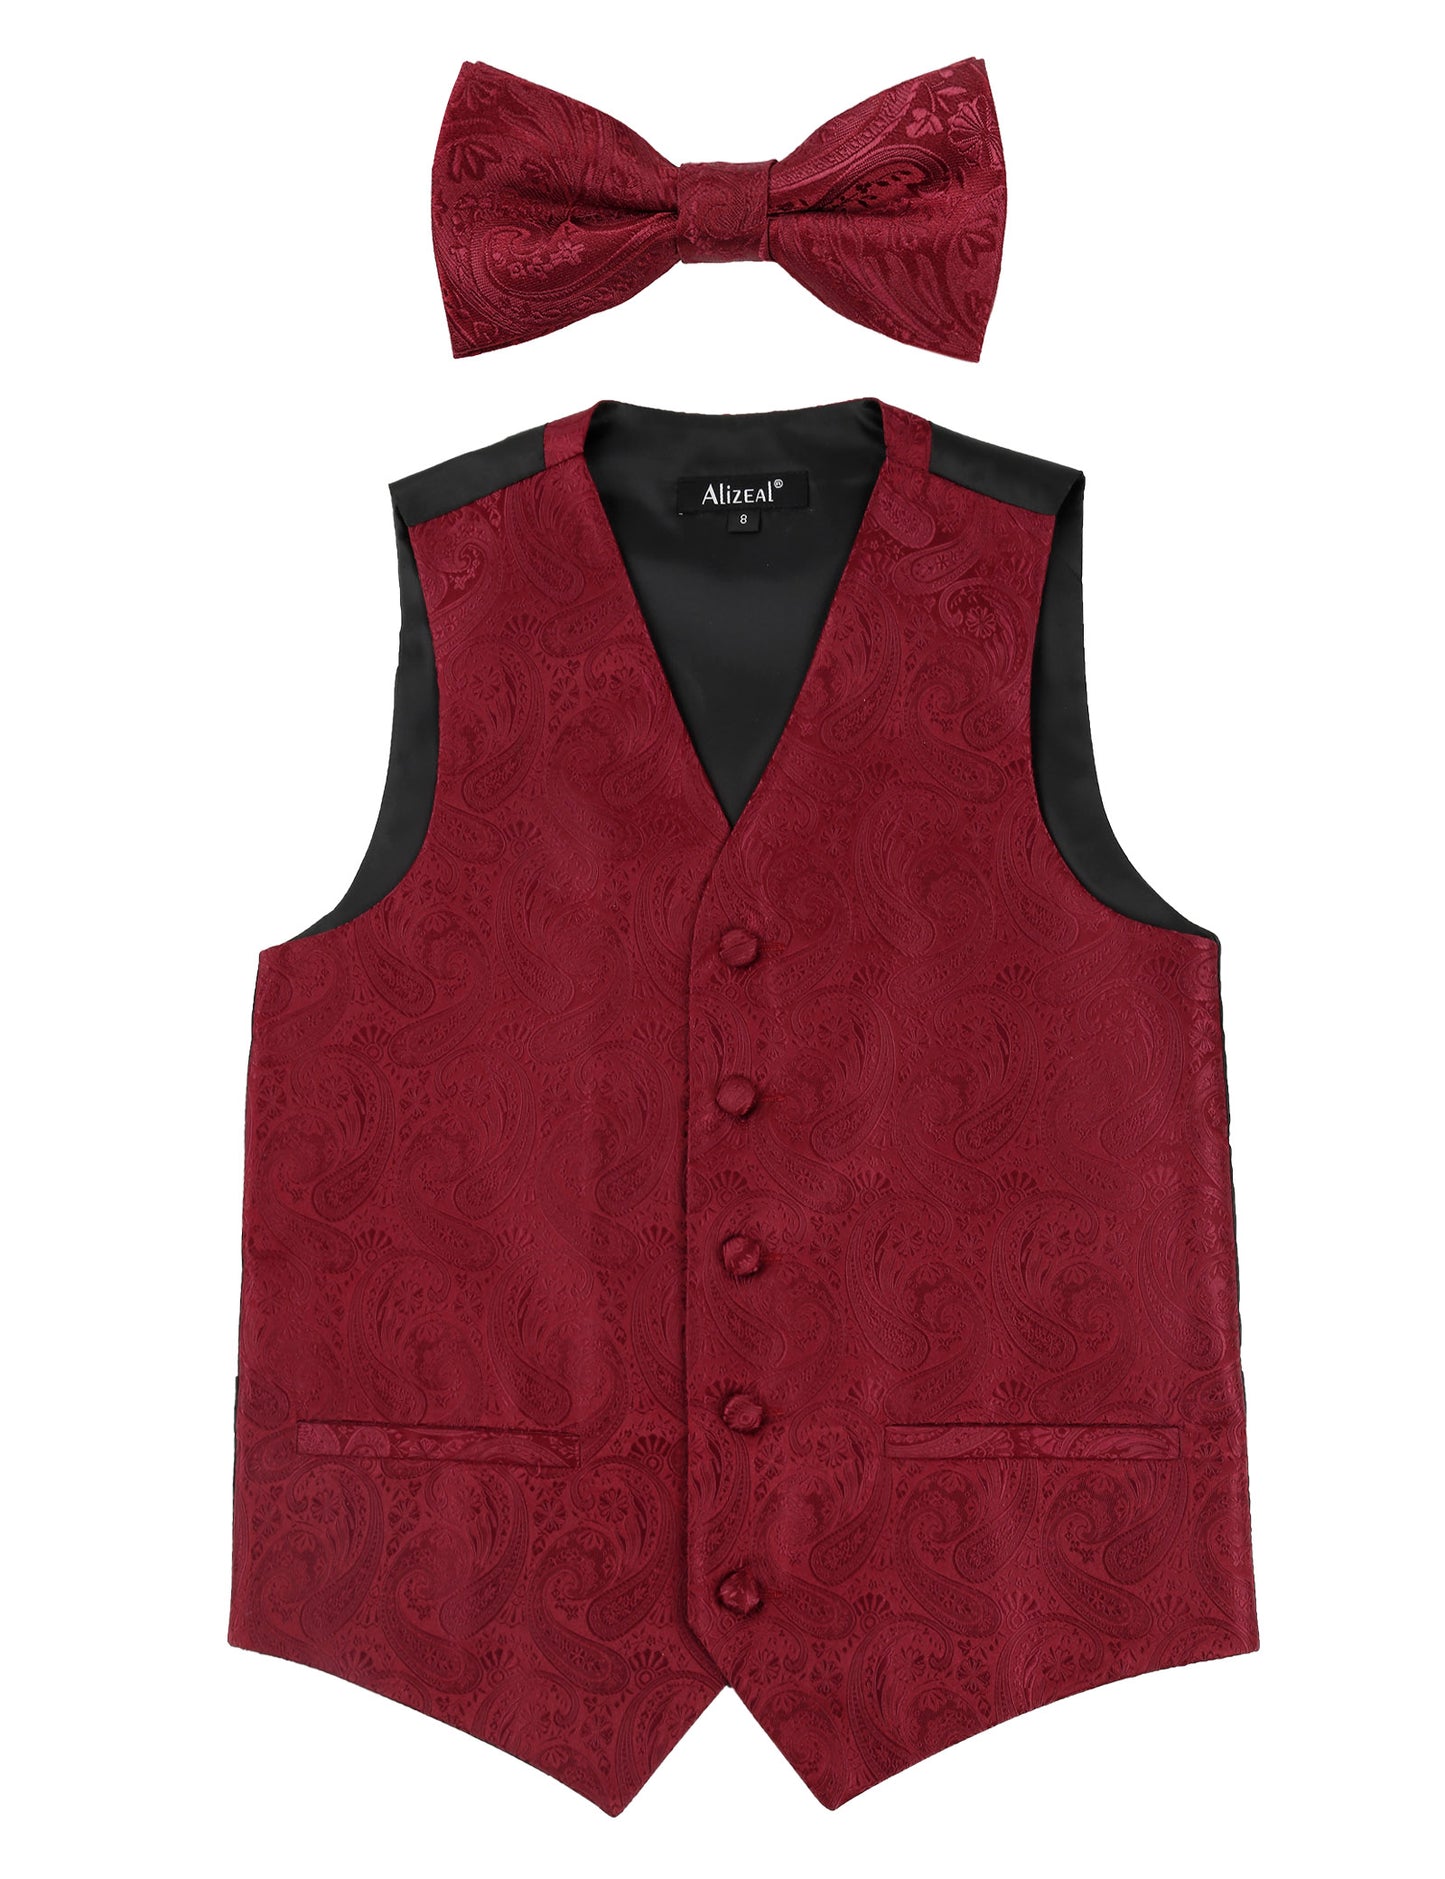 Boy's Paisley Jacquard Pre-Tied Bow Tie with Classic Floral Dress Suit Vest Set, 077-Maroon